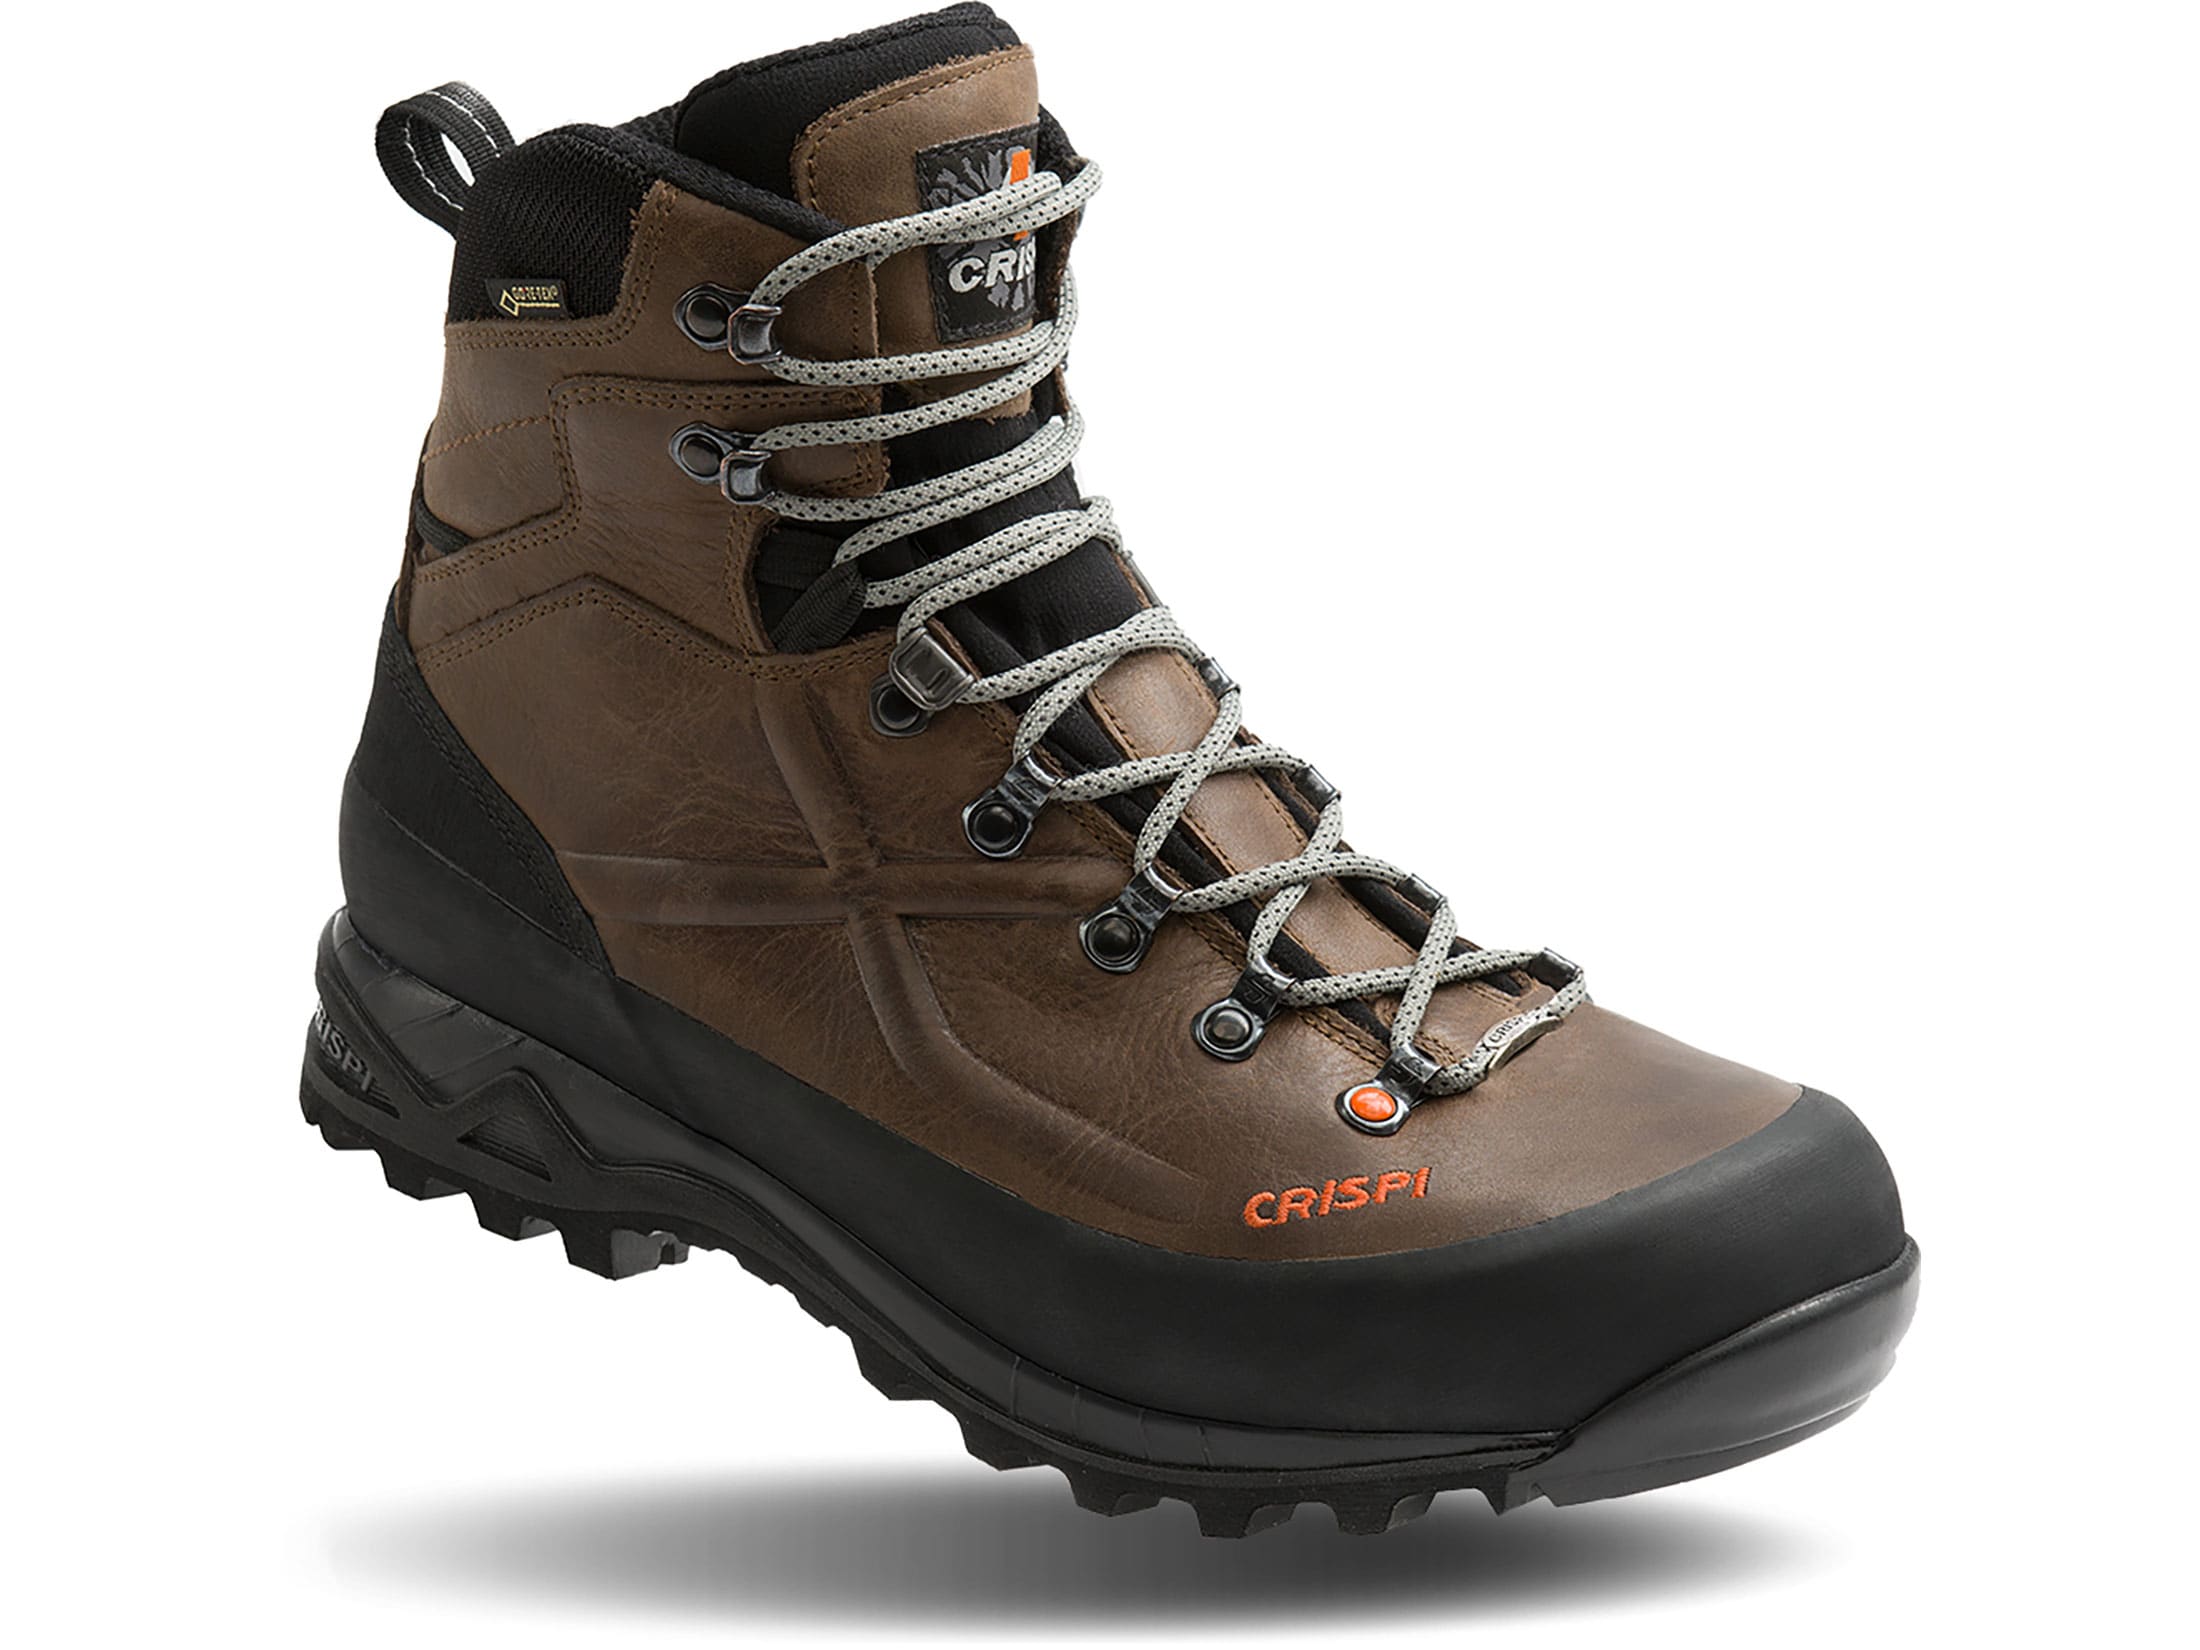 Crispi Valdres Plus GTX 8 Hunting Boots Leather Brown Men's 12.5 EE